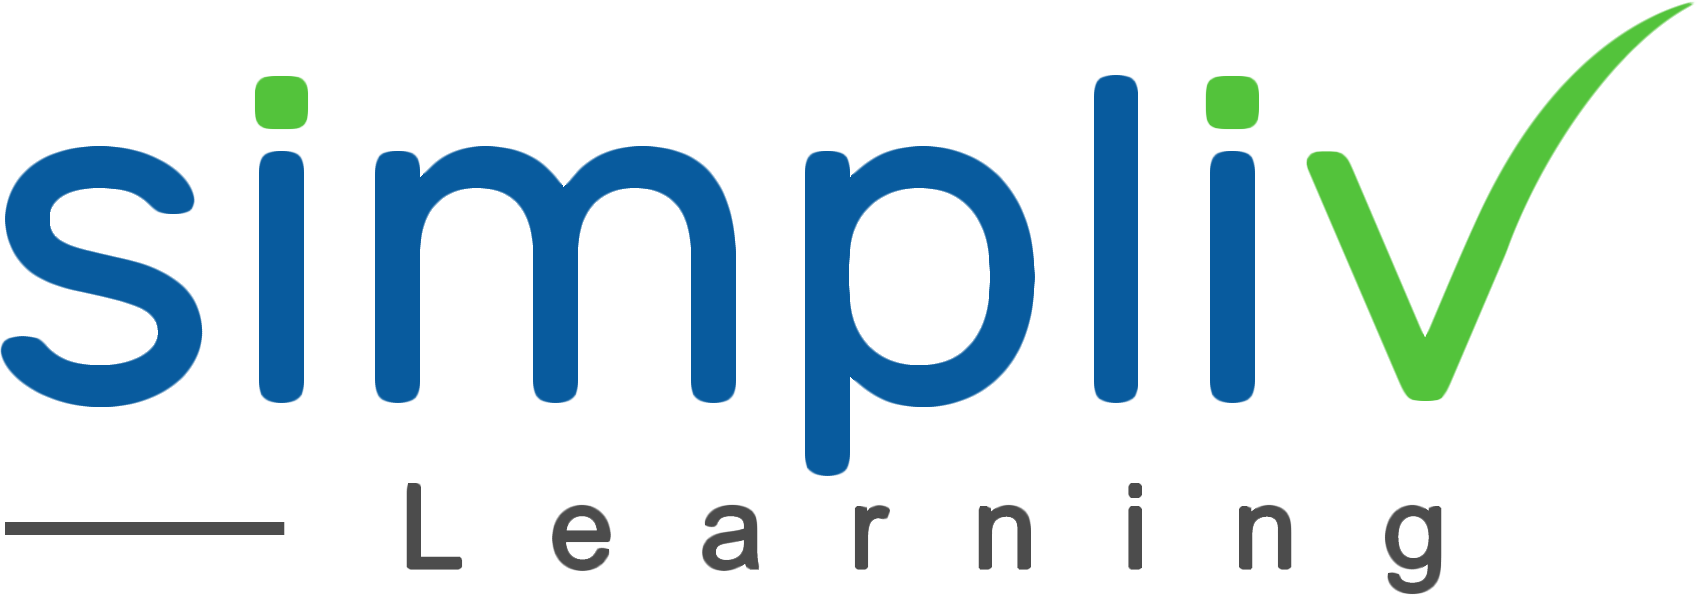 best platform for online learning & teaching | simpliv learning